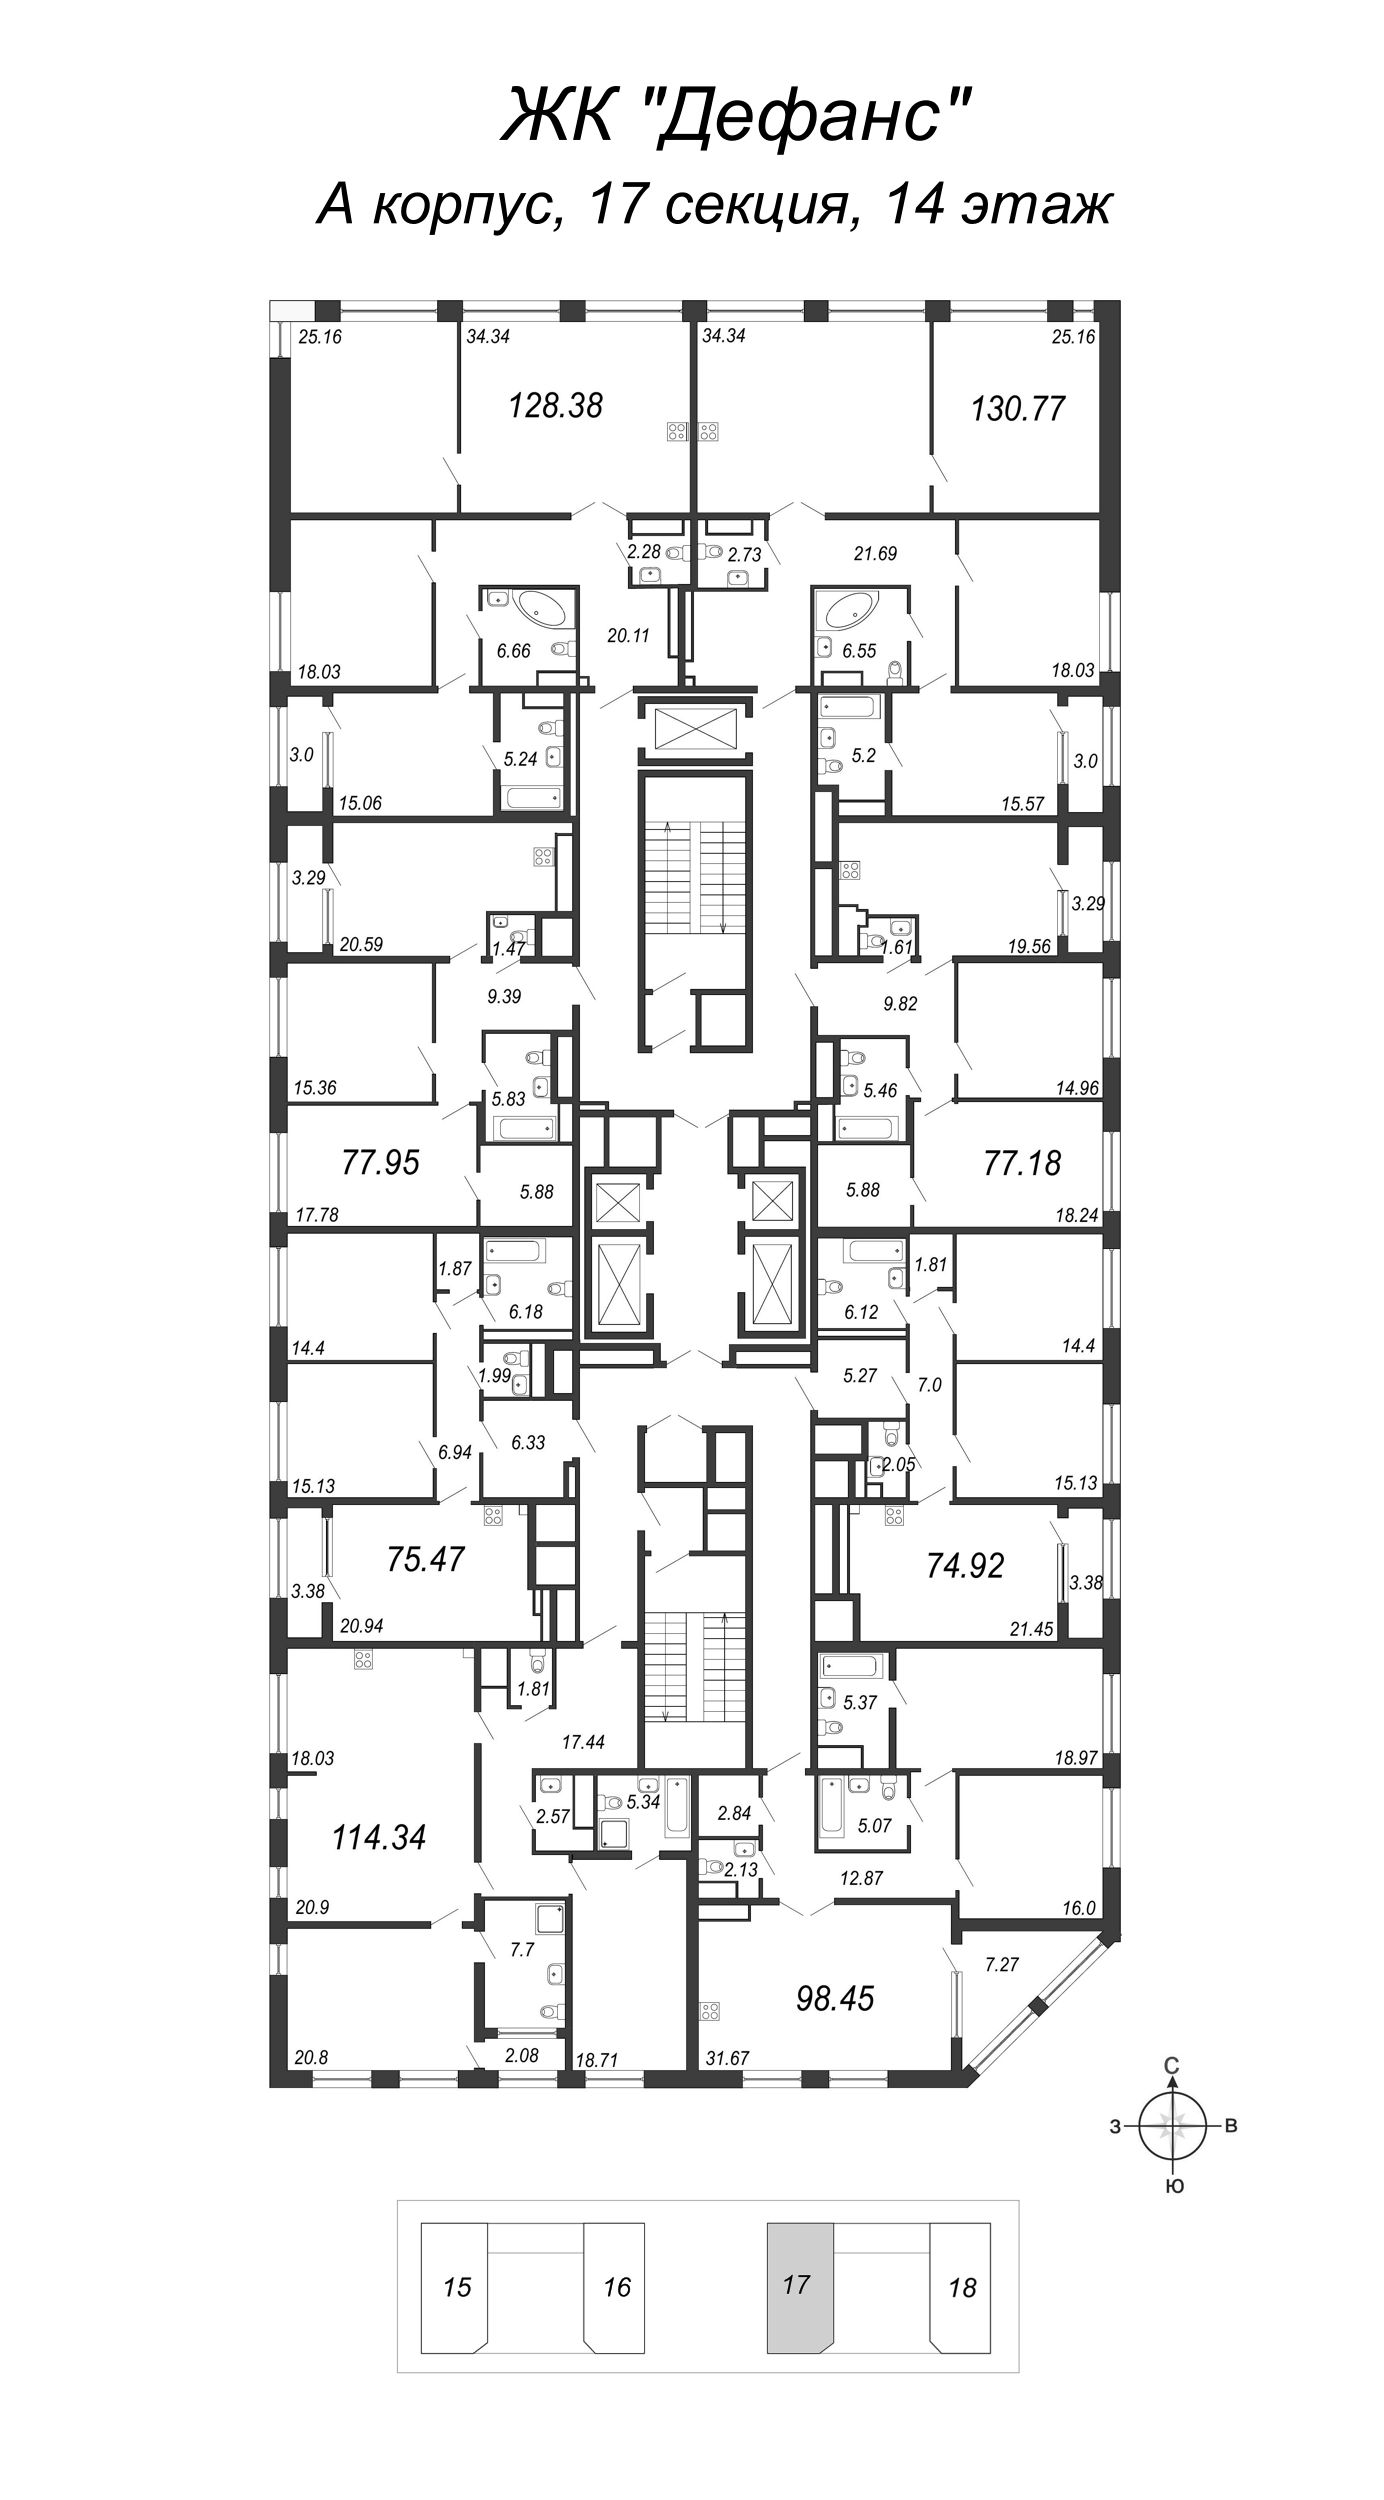 4-комнатная (Евро) квартира, 128.38 м² - планировка этажа